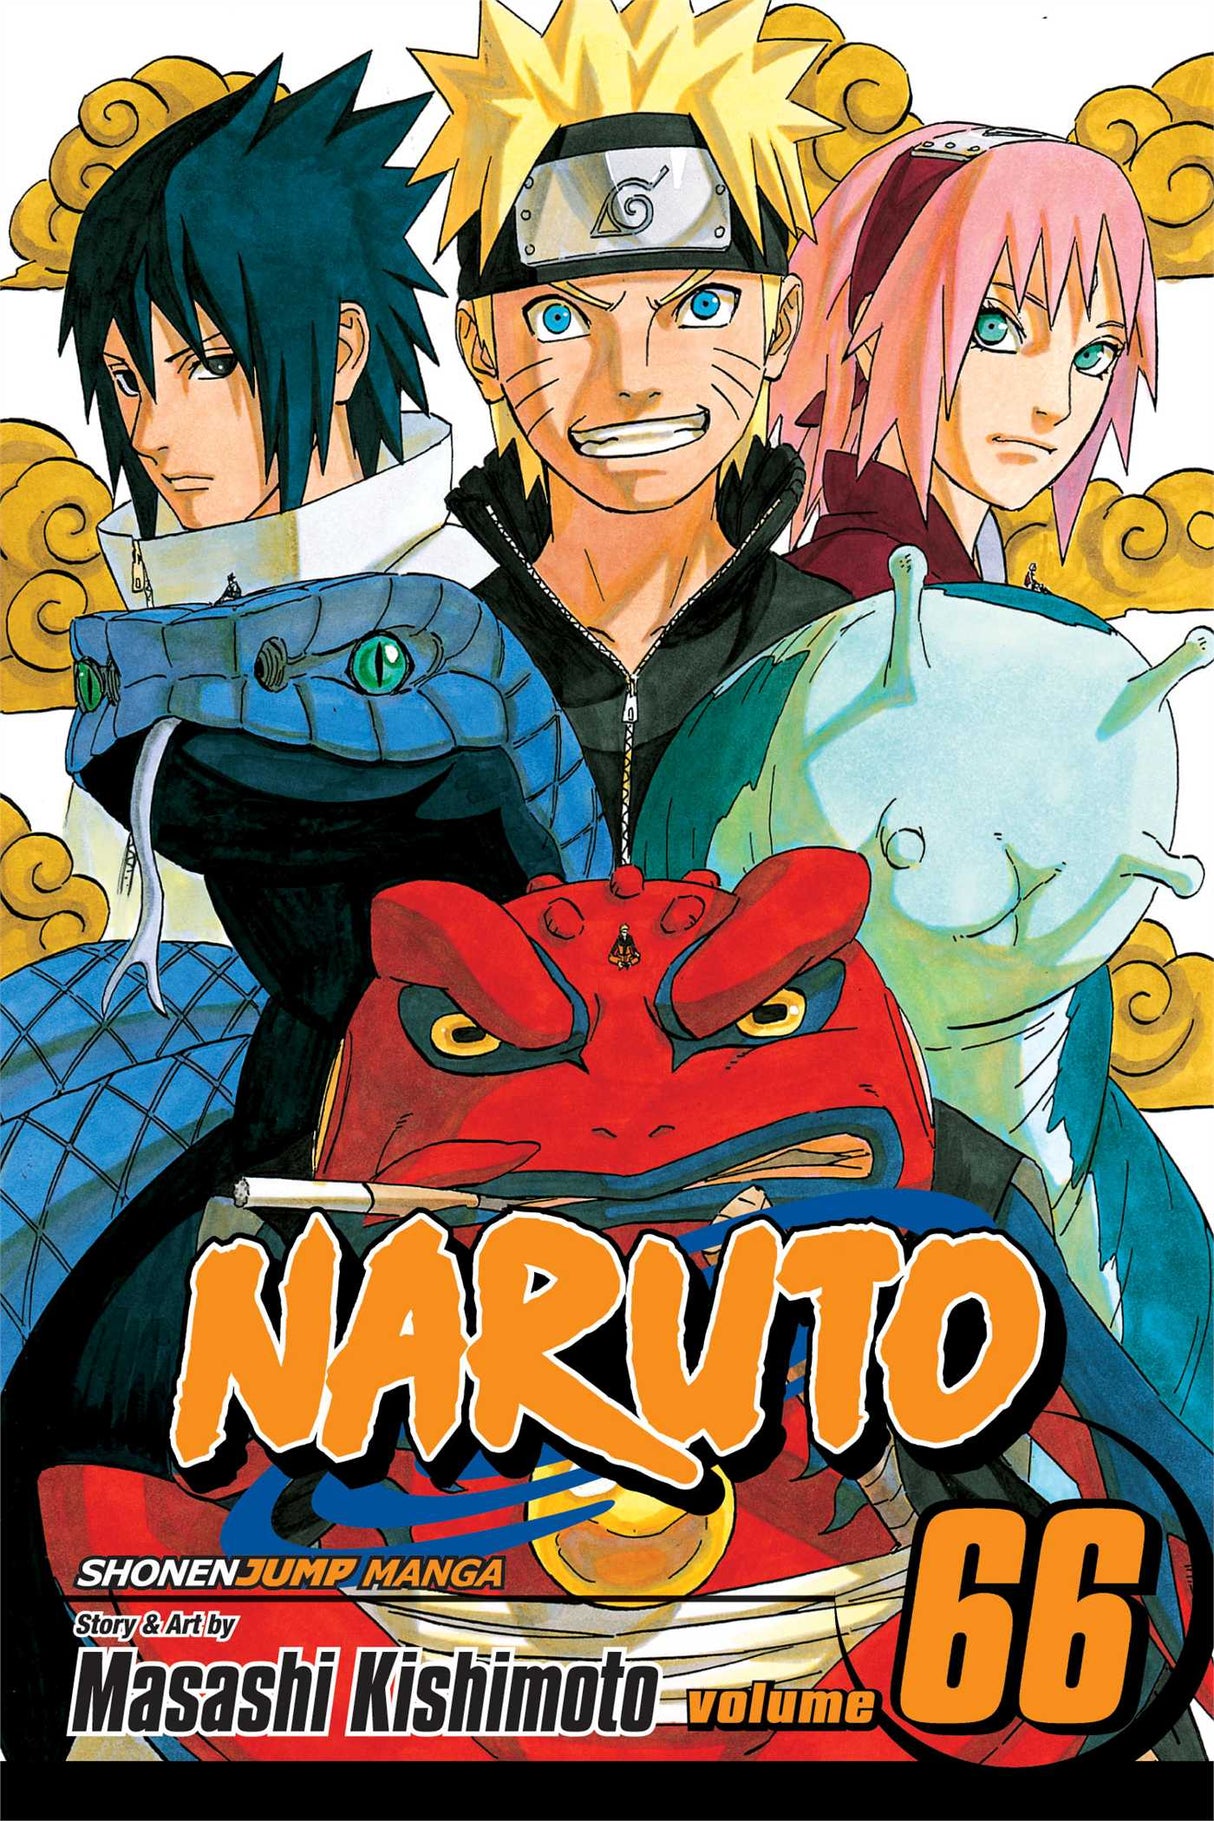 Cover image of the Manga Naruto, Vol.66: The New Three